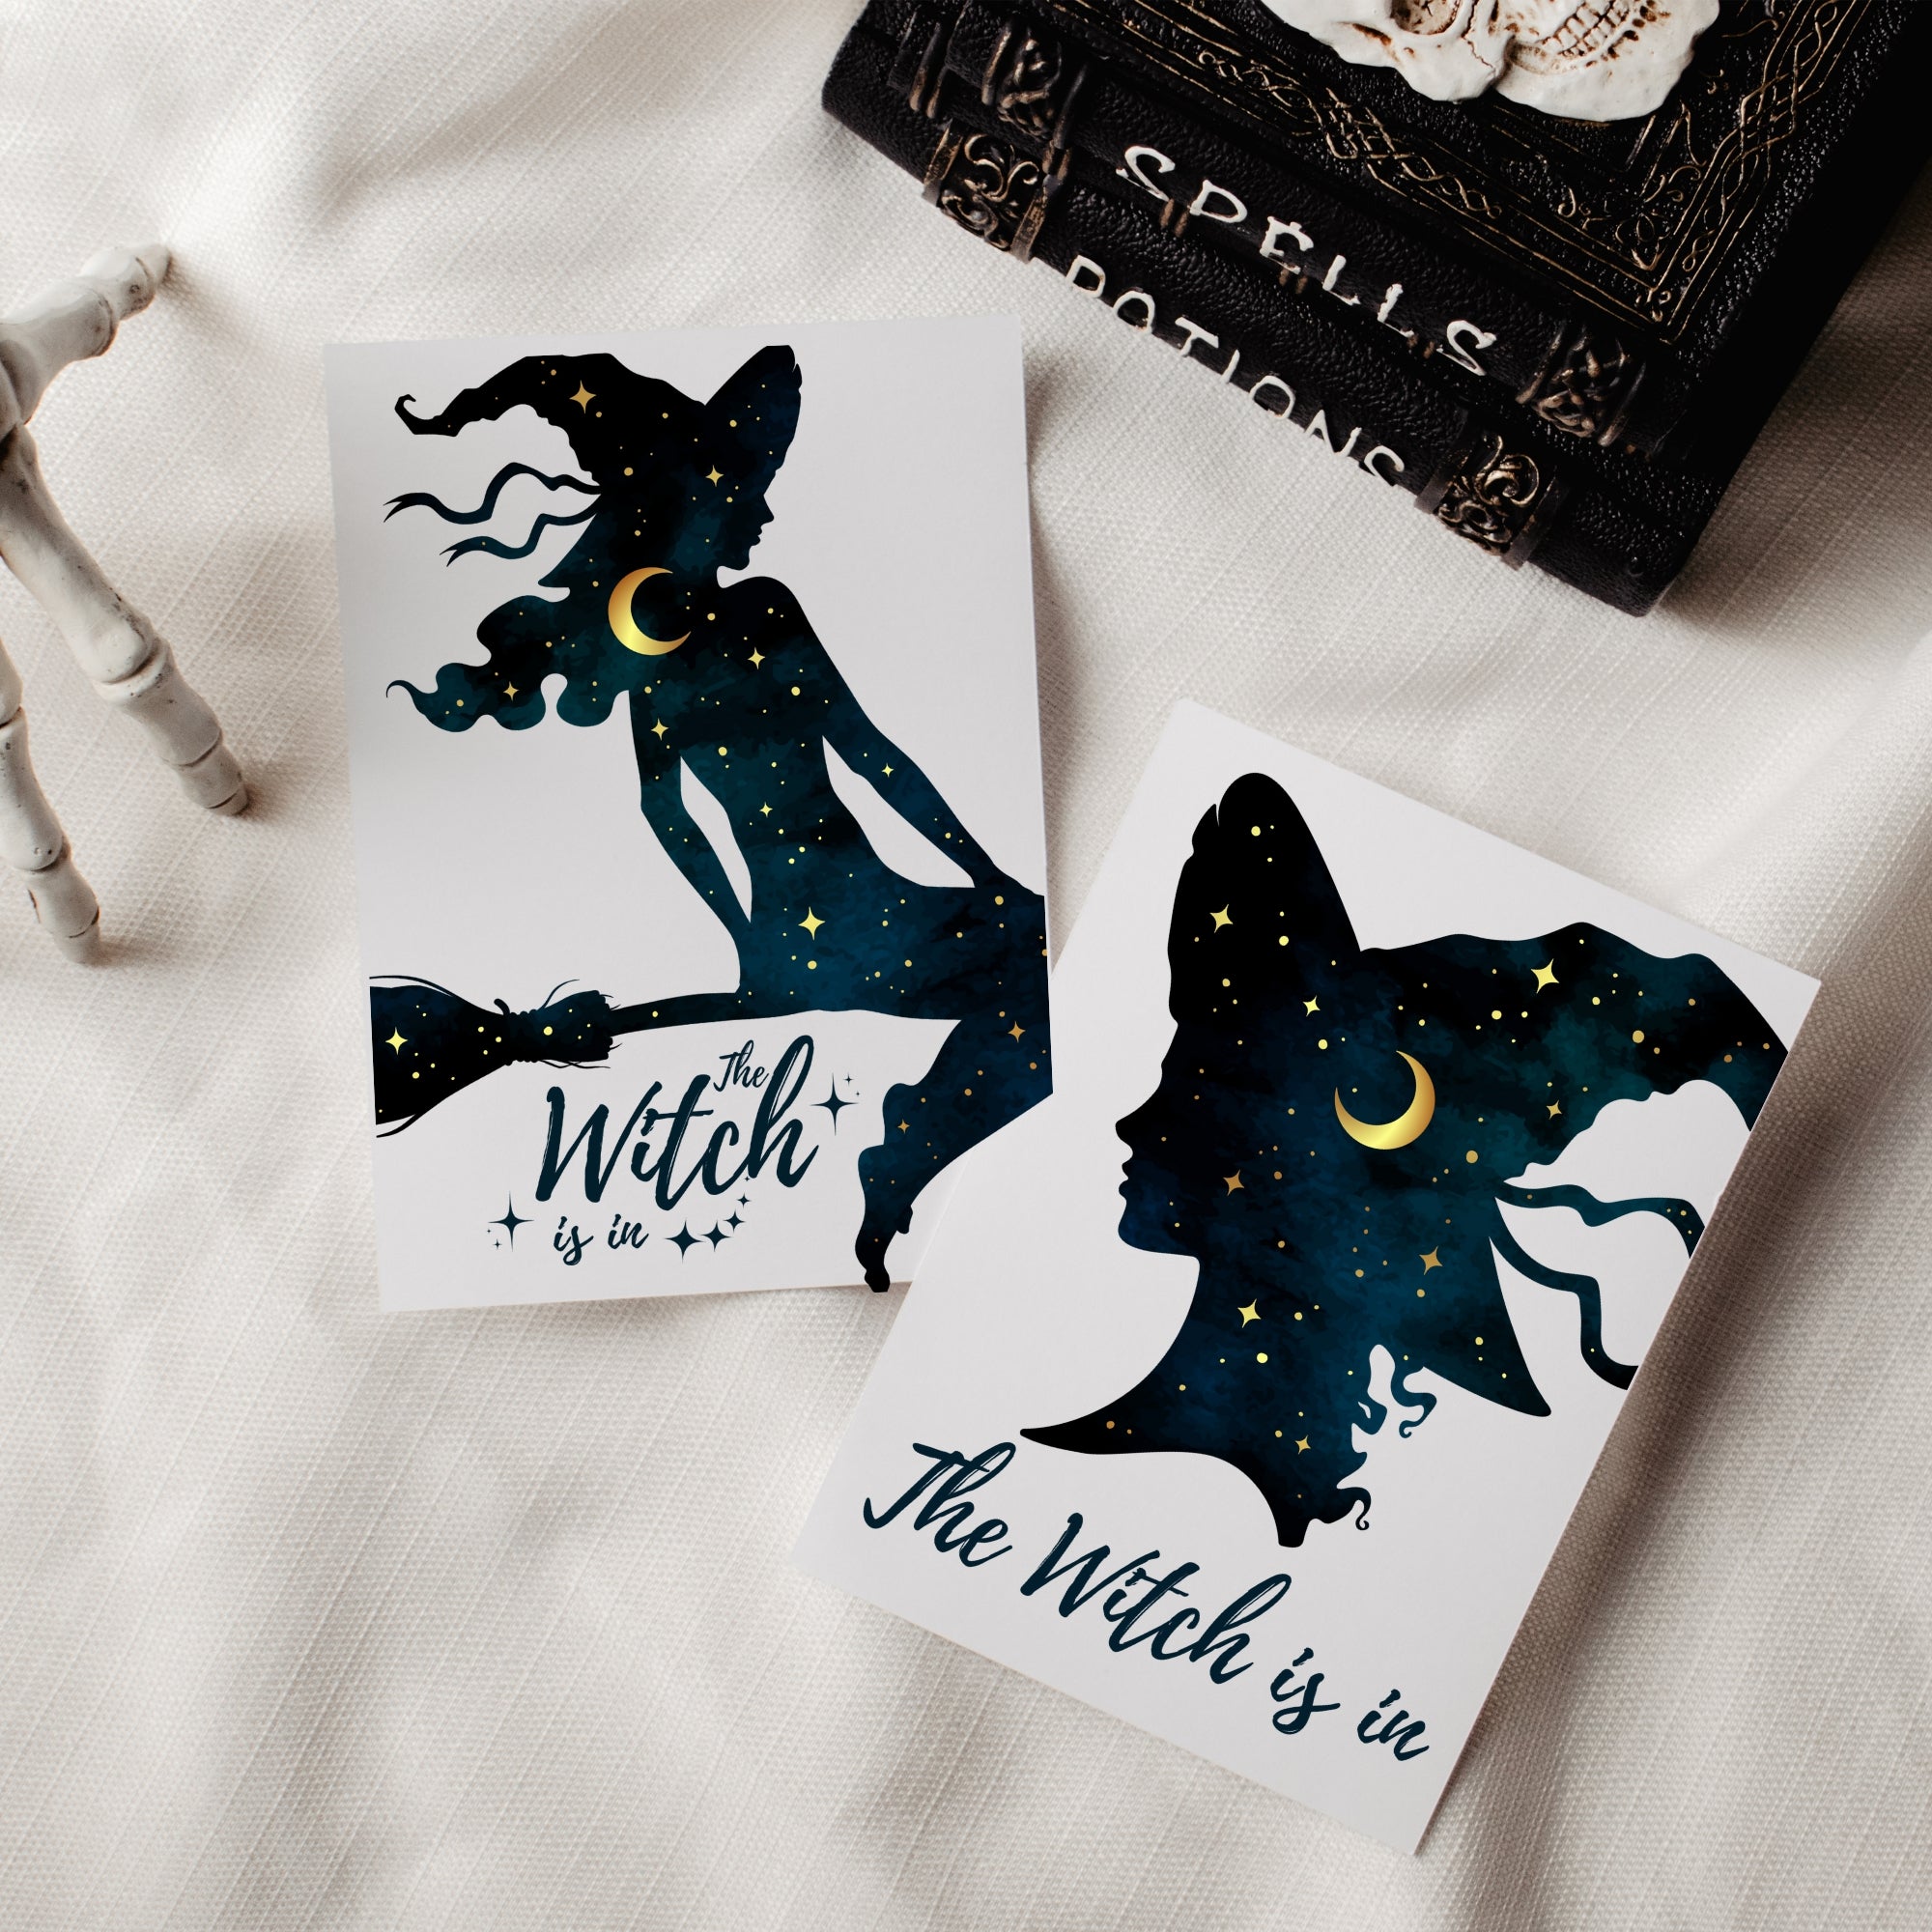 The Witch is in Postkarte mit Hexenbesen